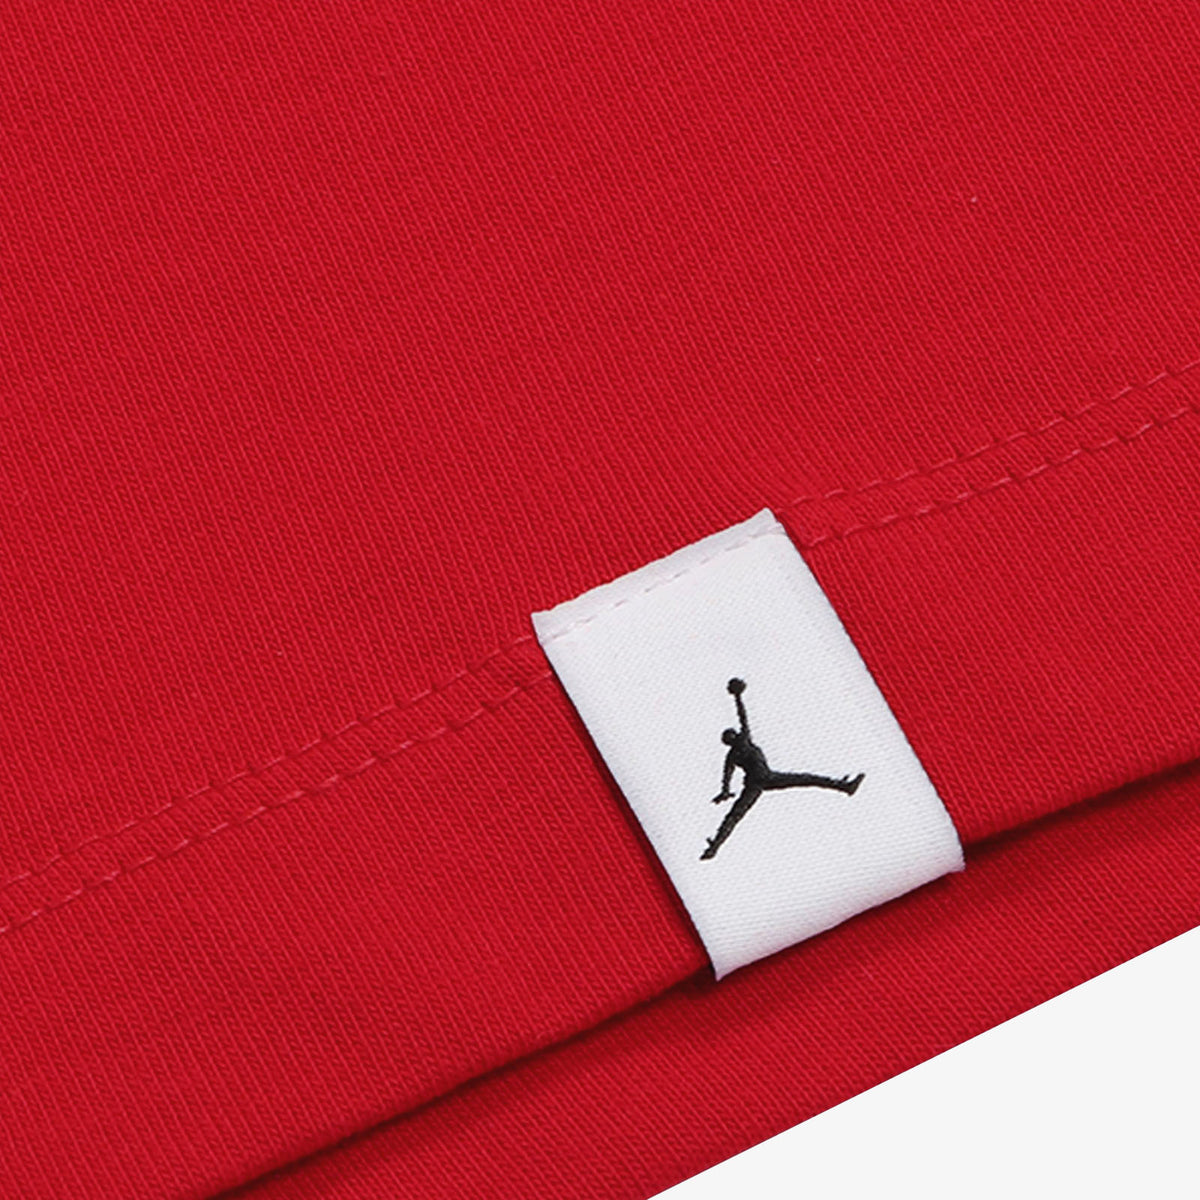 Jordan X Zion T-Shirt - Red